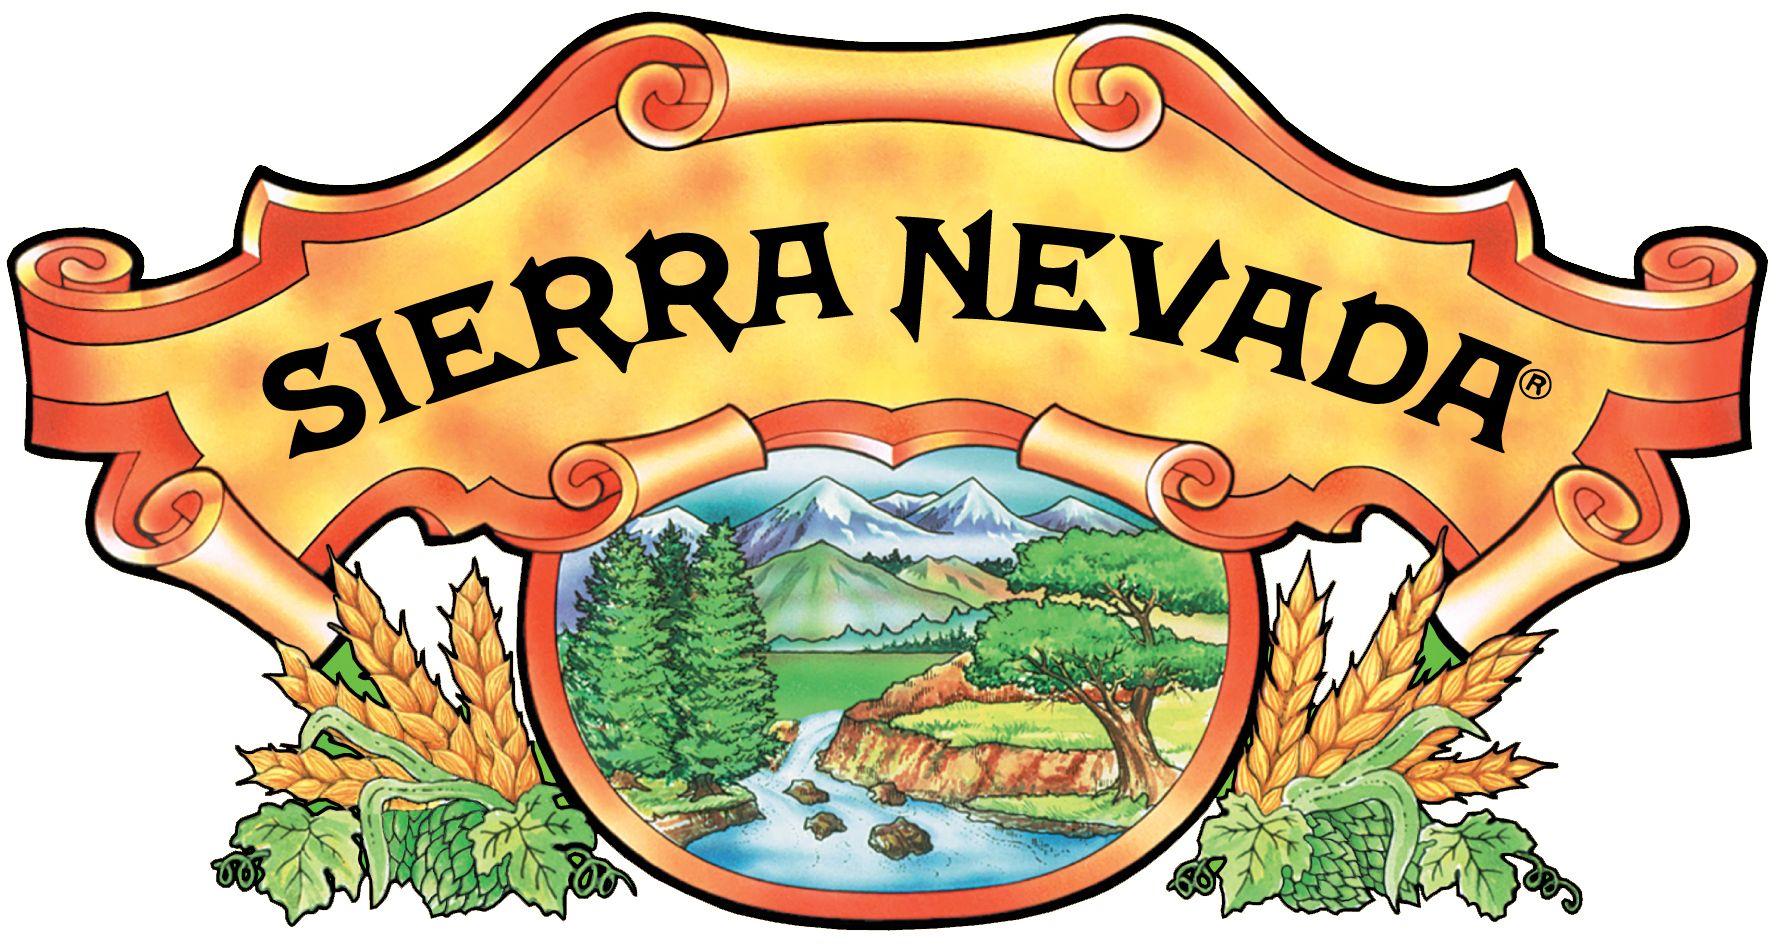 Serria Nevada Logo - Sierra Nevada Finds Rich Water Source | Independent Beers